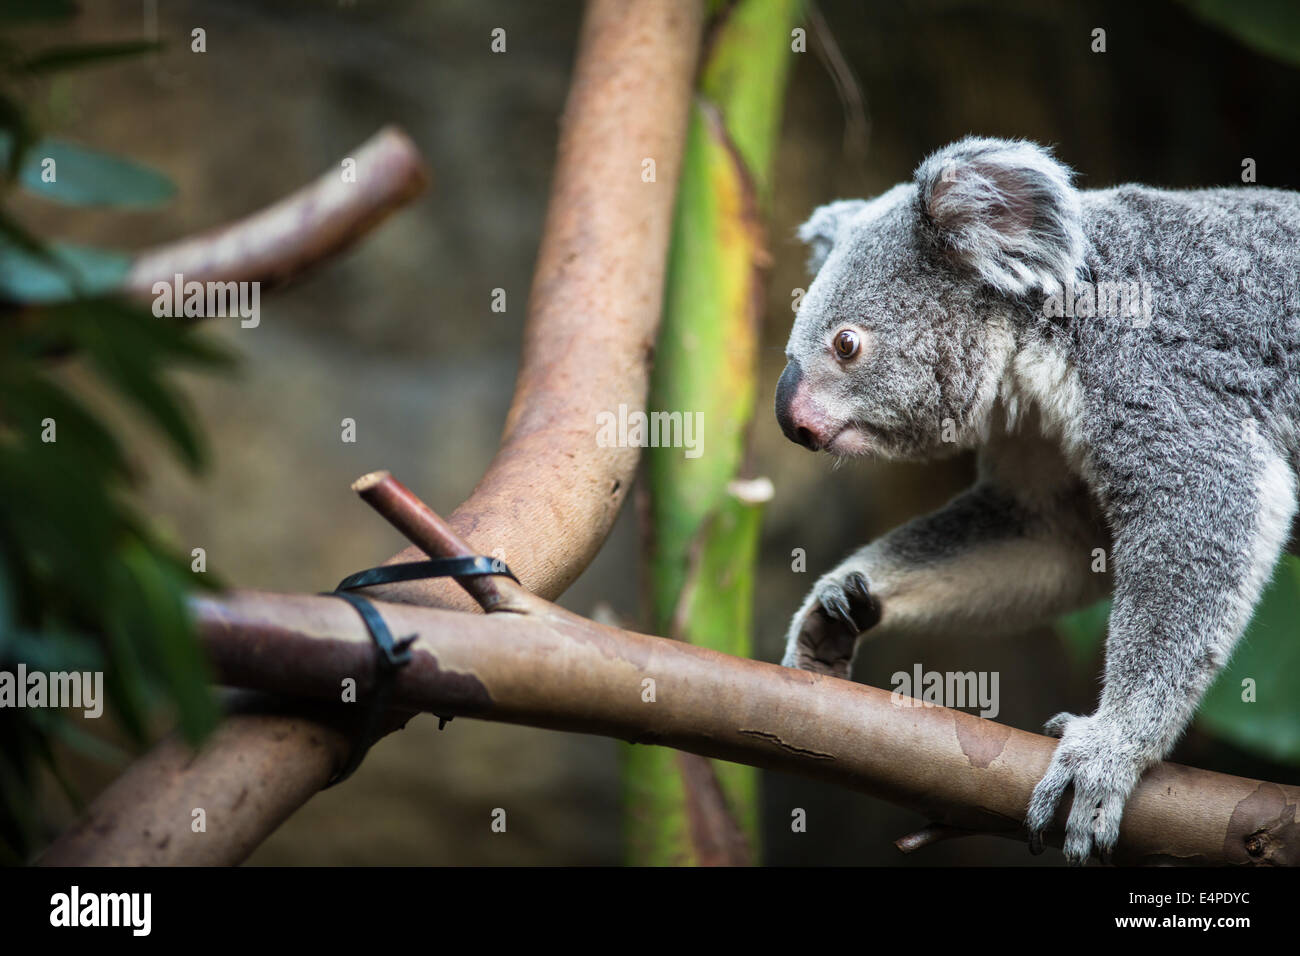 Koala on a tree with bush green background Stock Photo